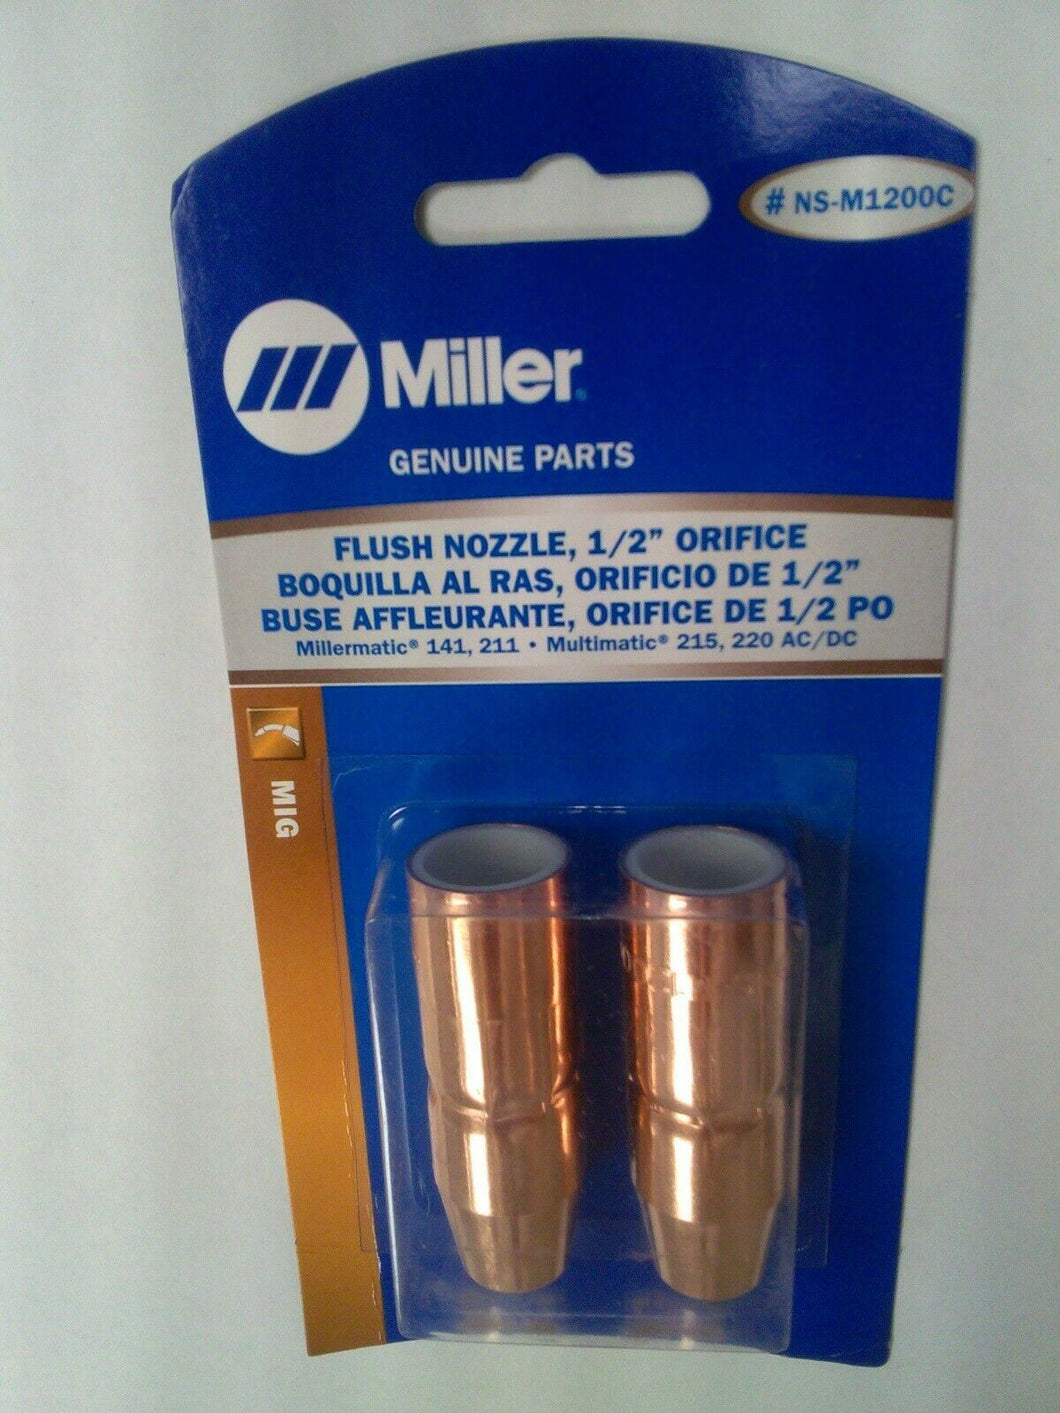 Miller NS-M1200C Flush Nozzle Copper Thread-On 1/2